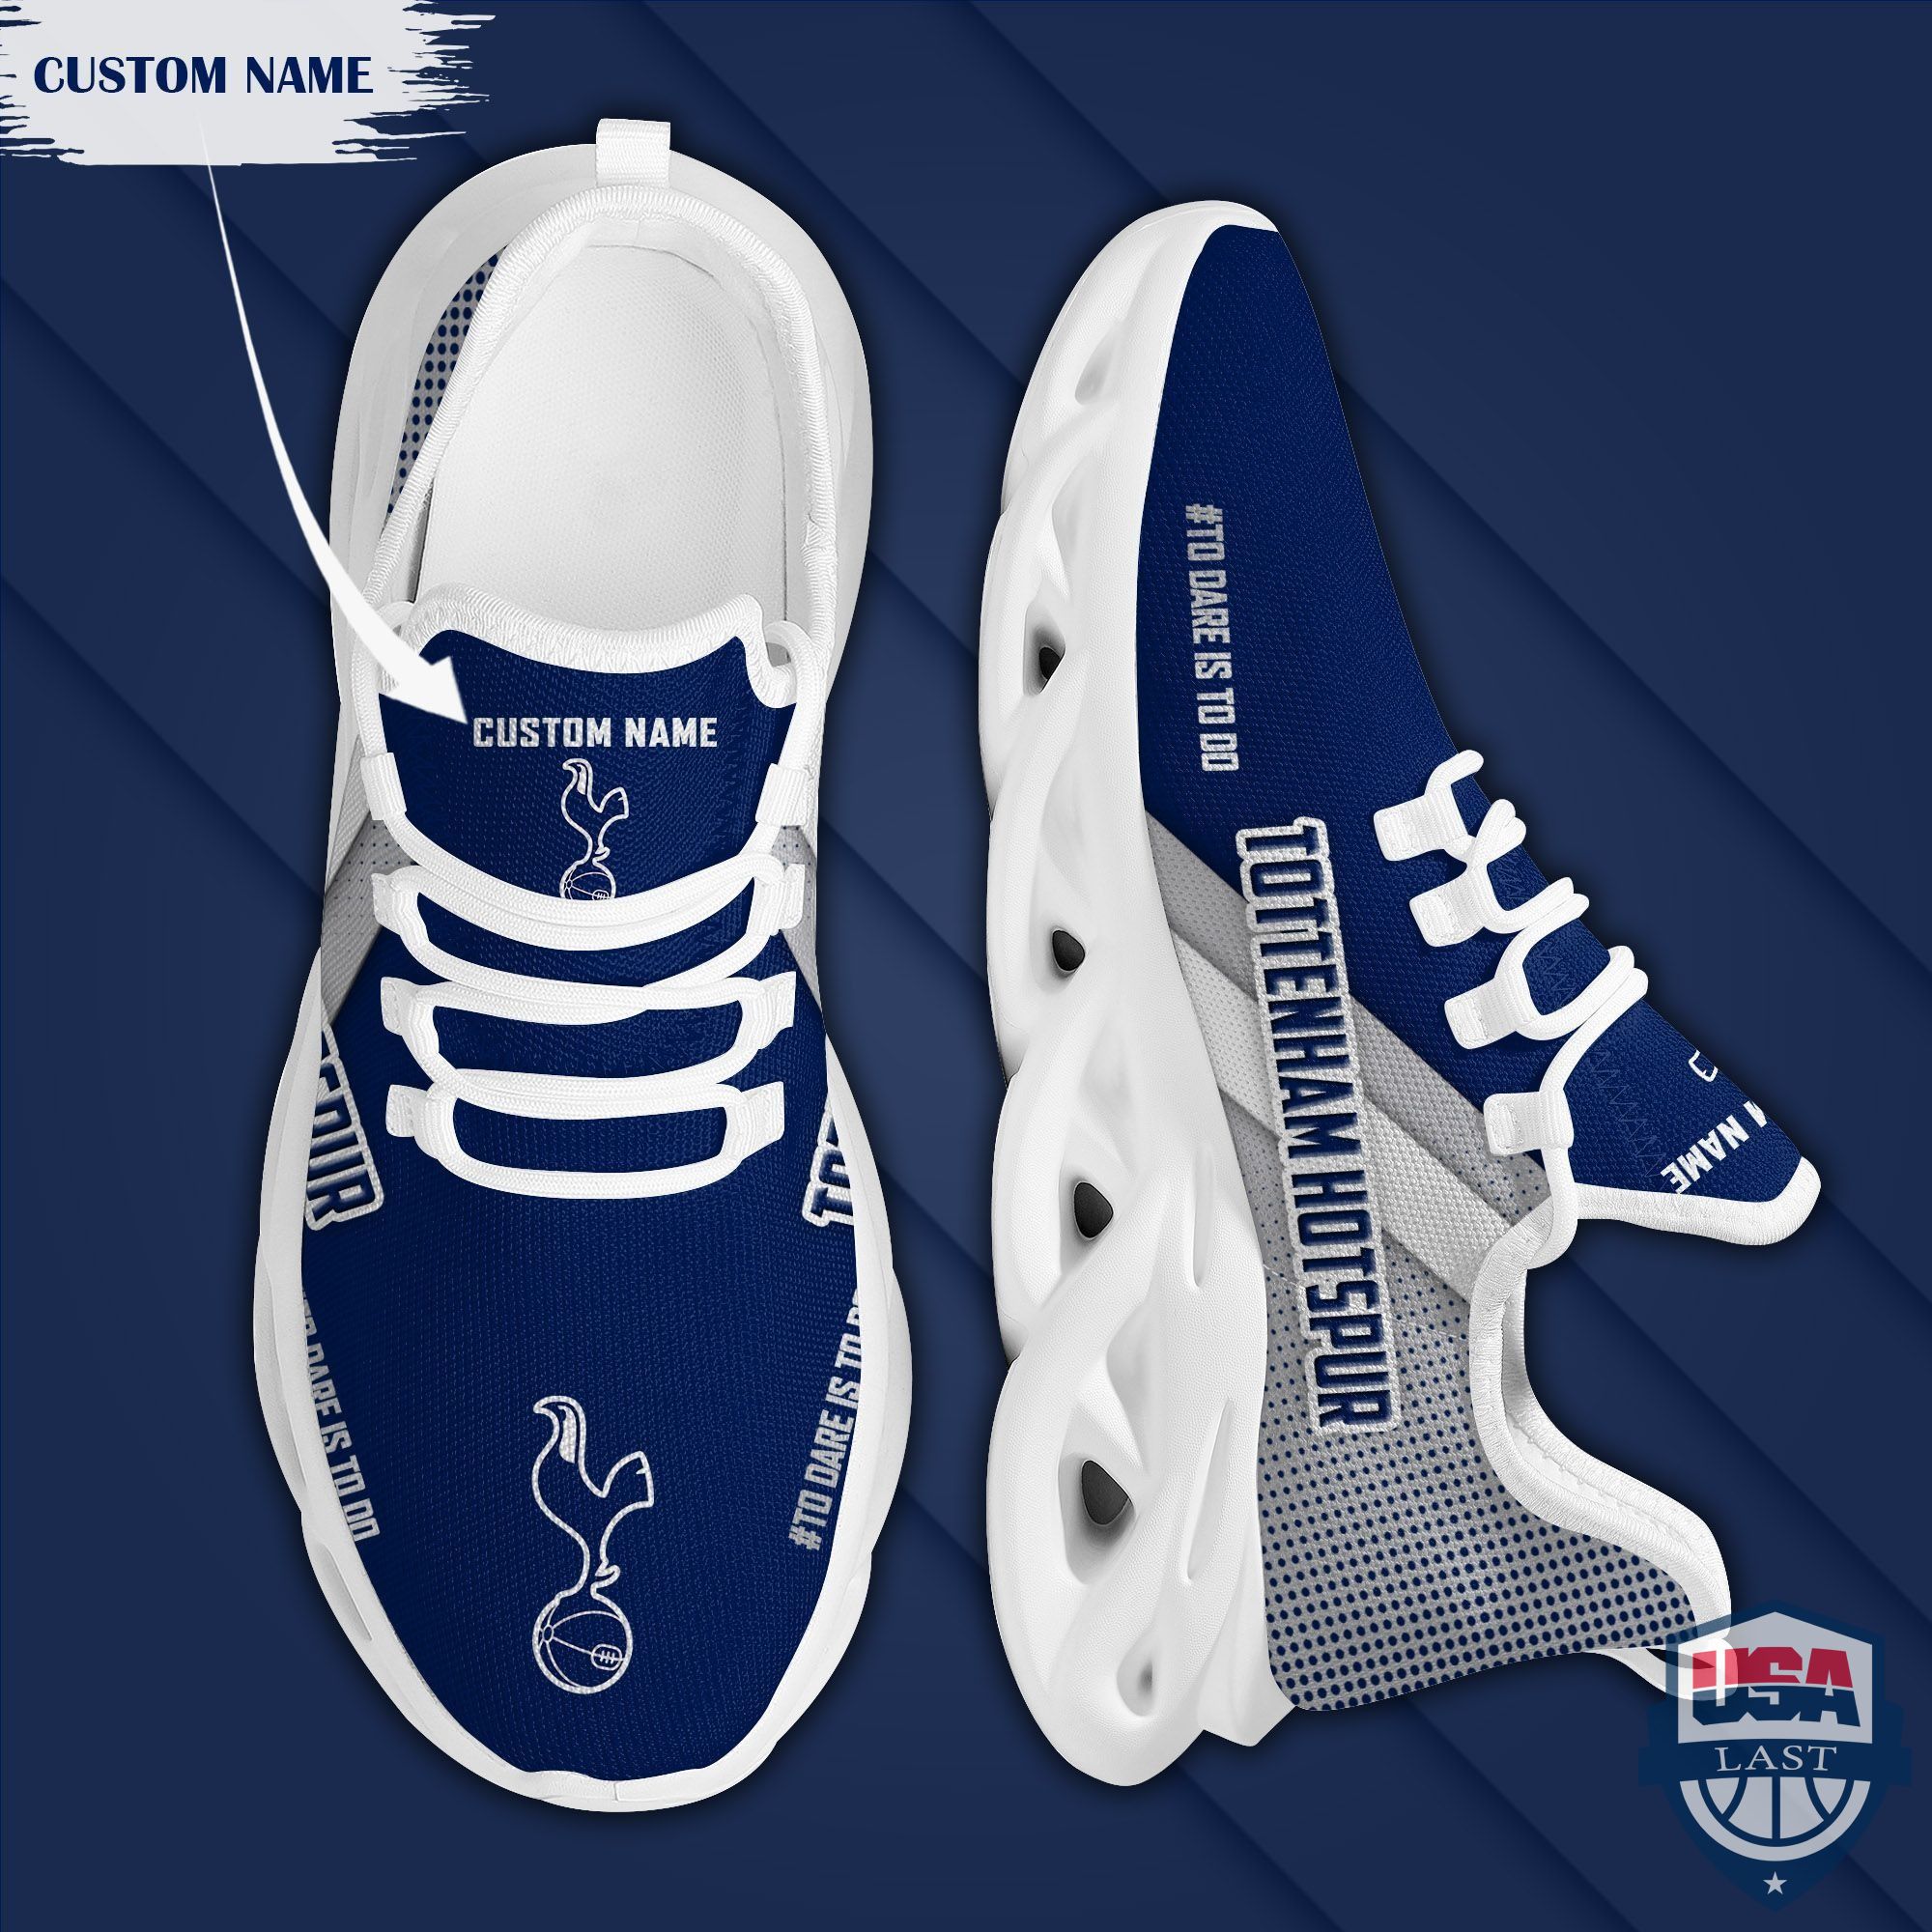 Tottenham Hotspur Custom Name Max Soul Shoes